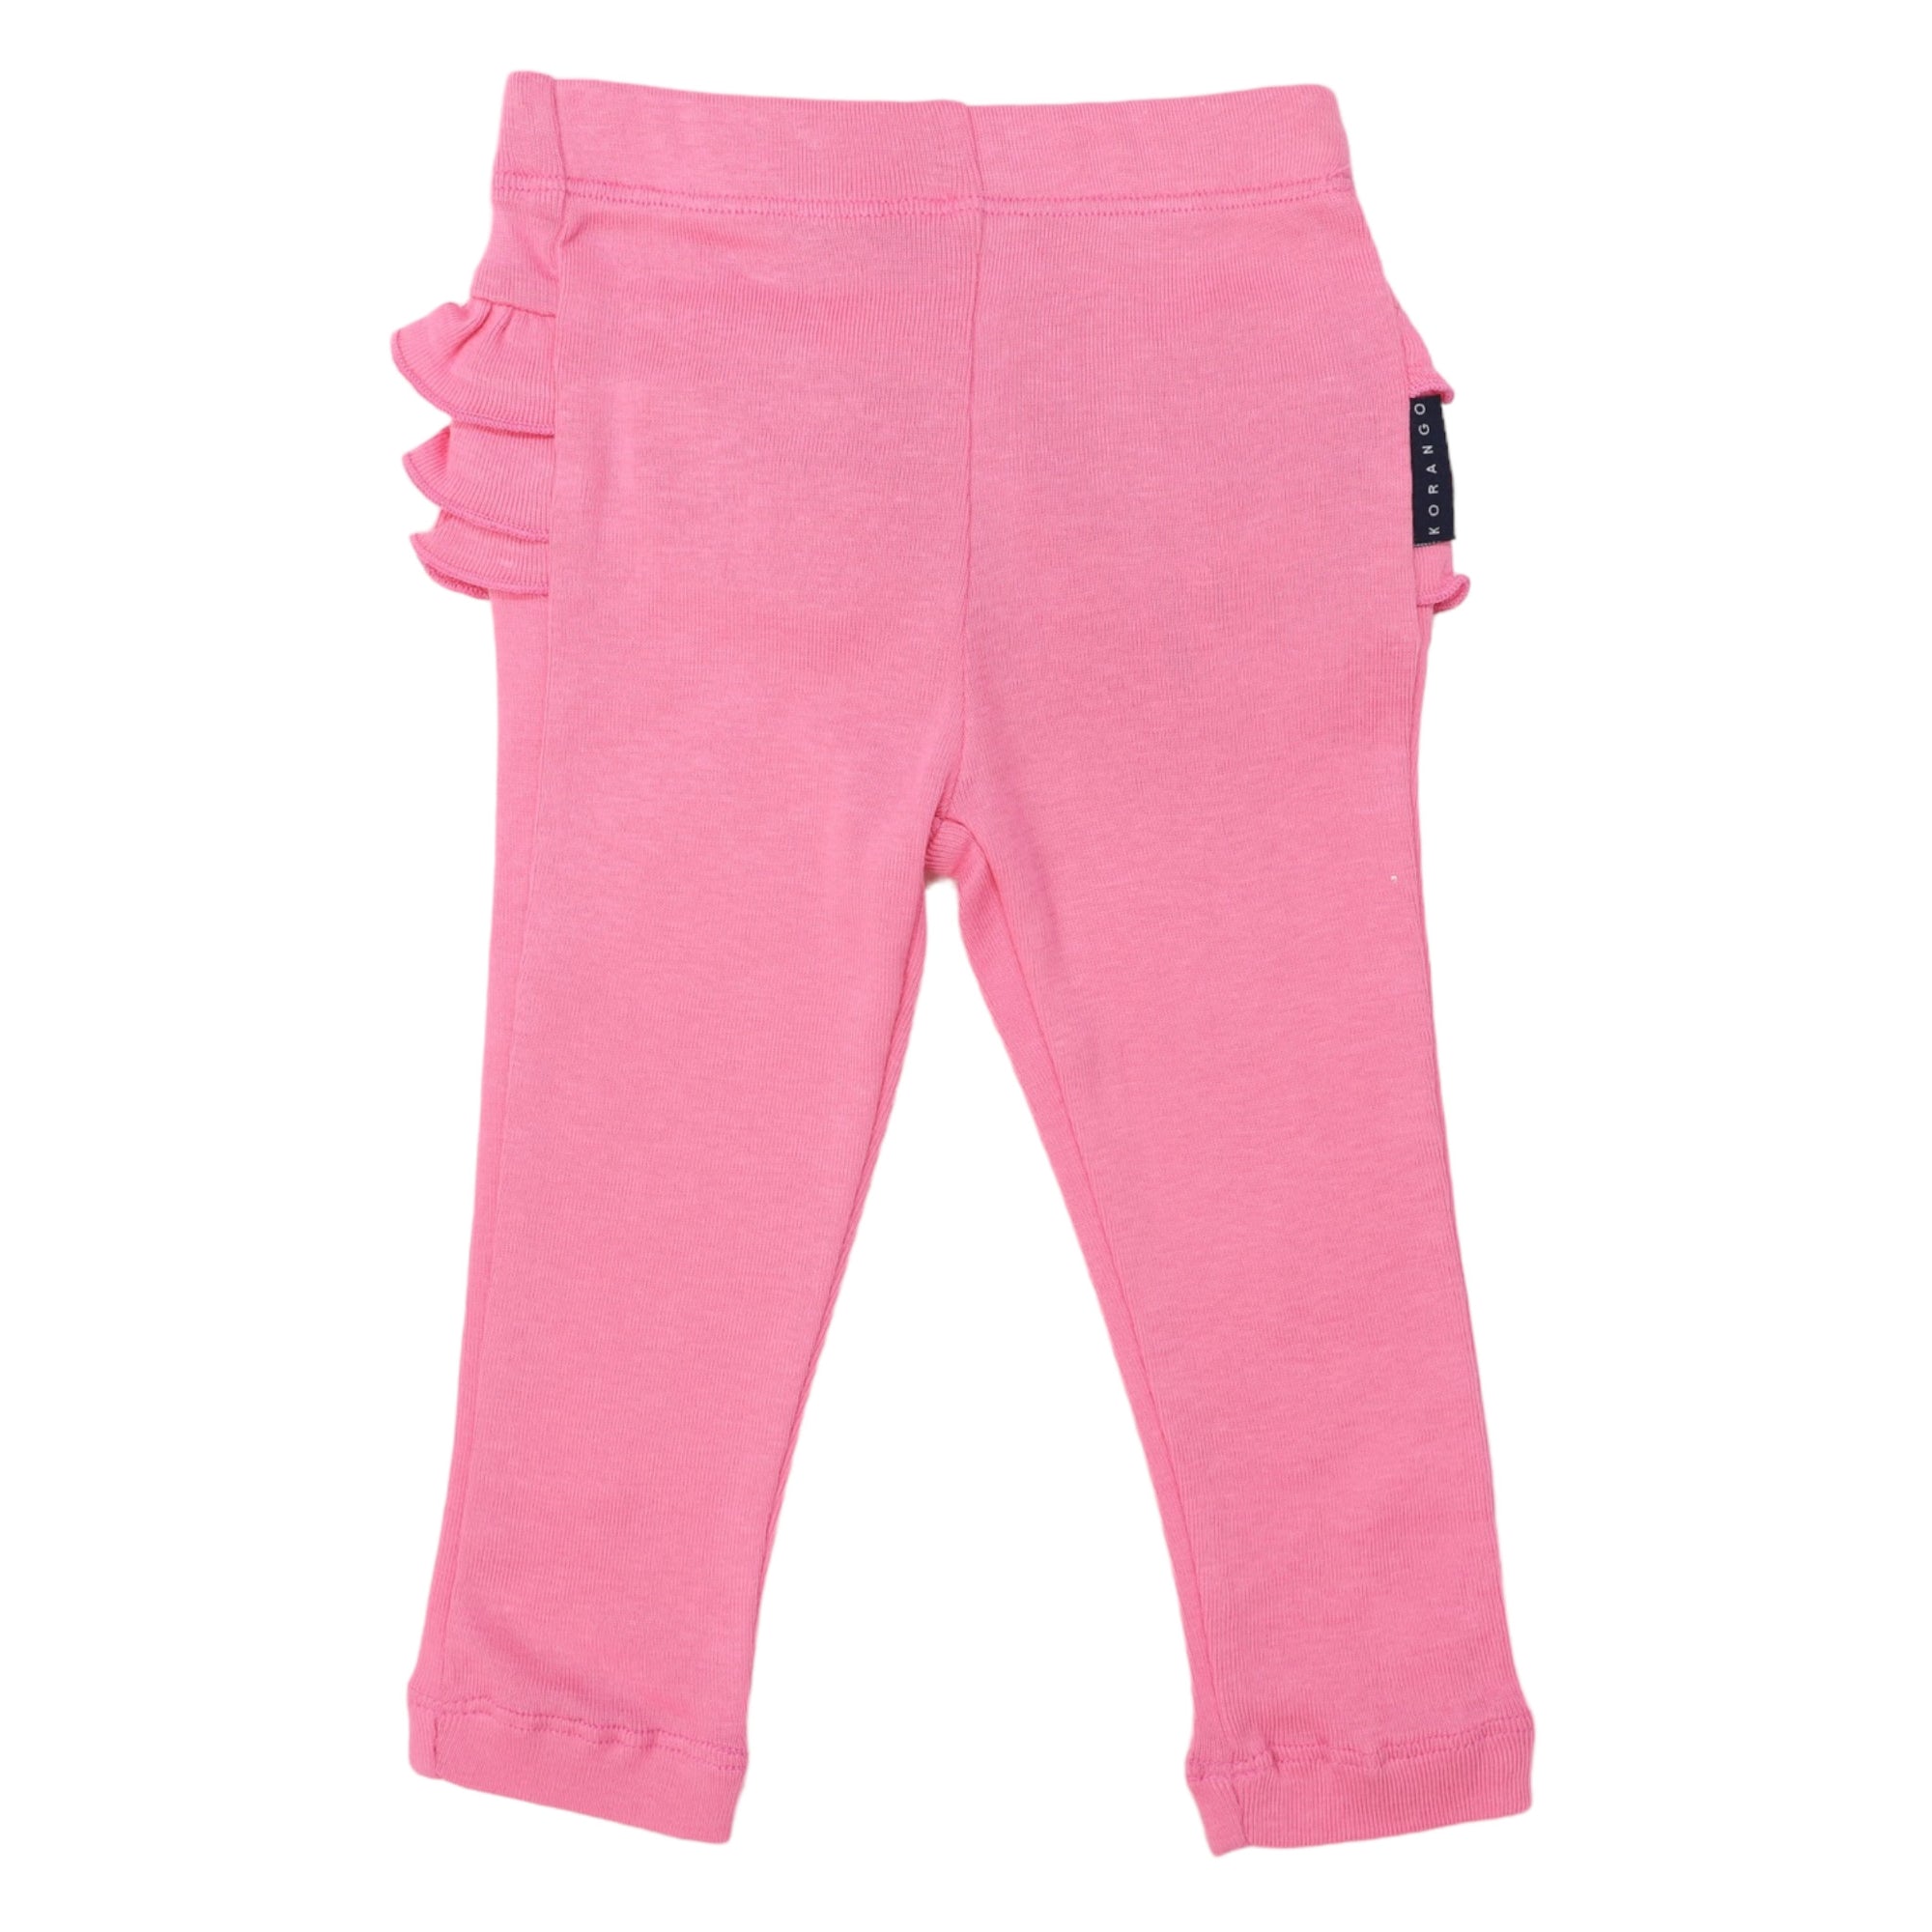 Korango Soft Cotton Modal Legging - Hot Pink